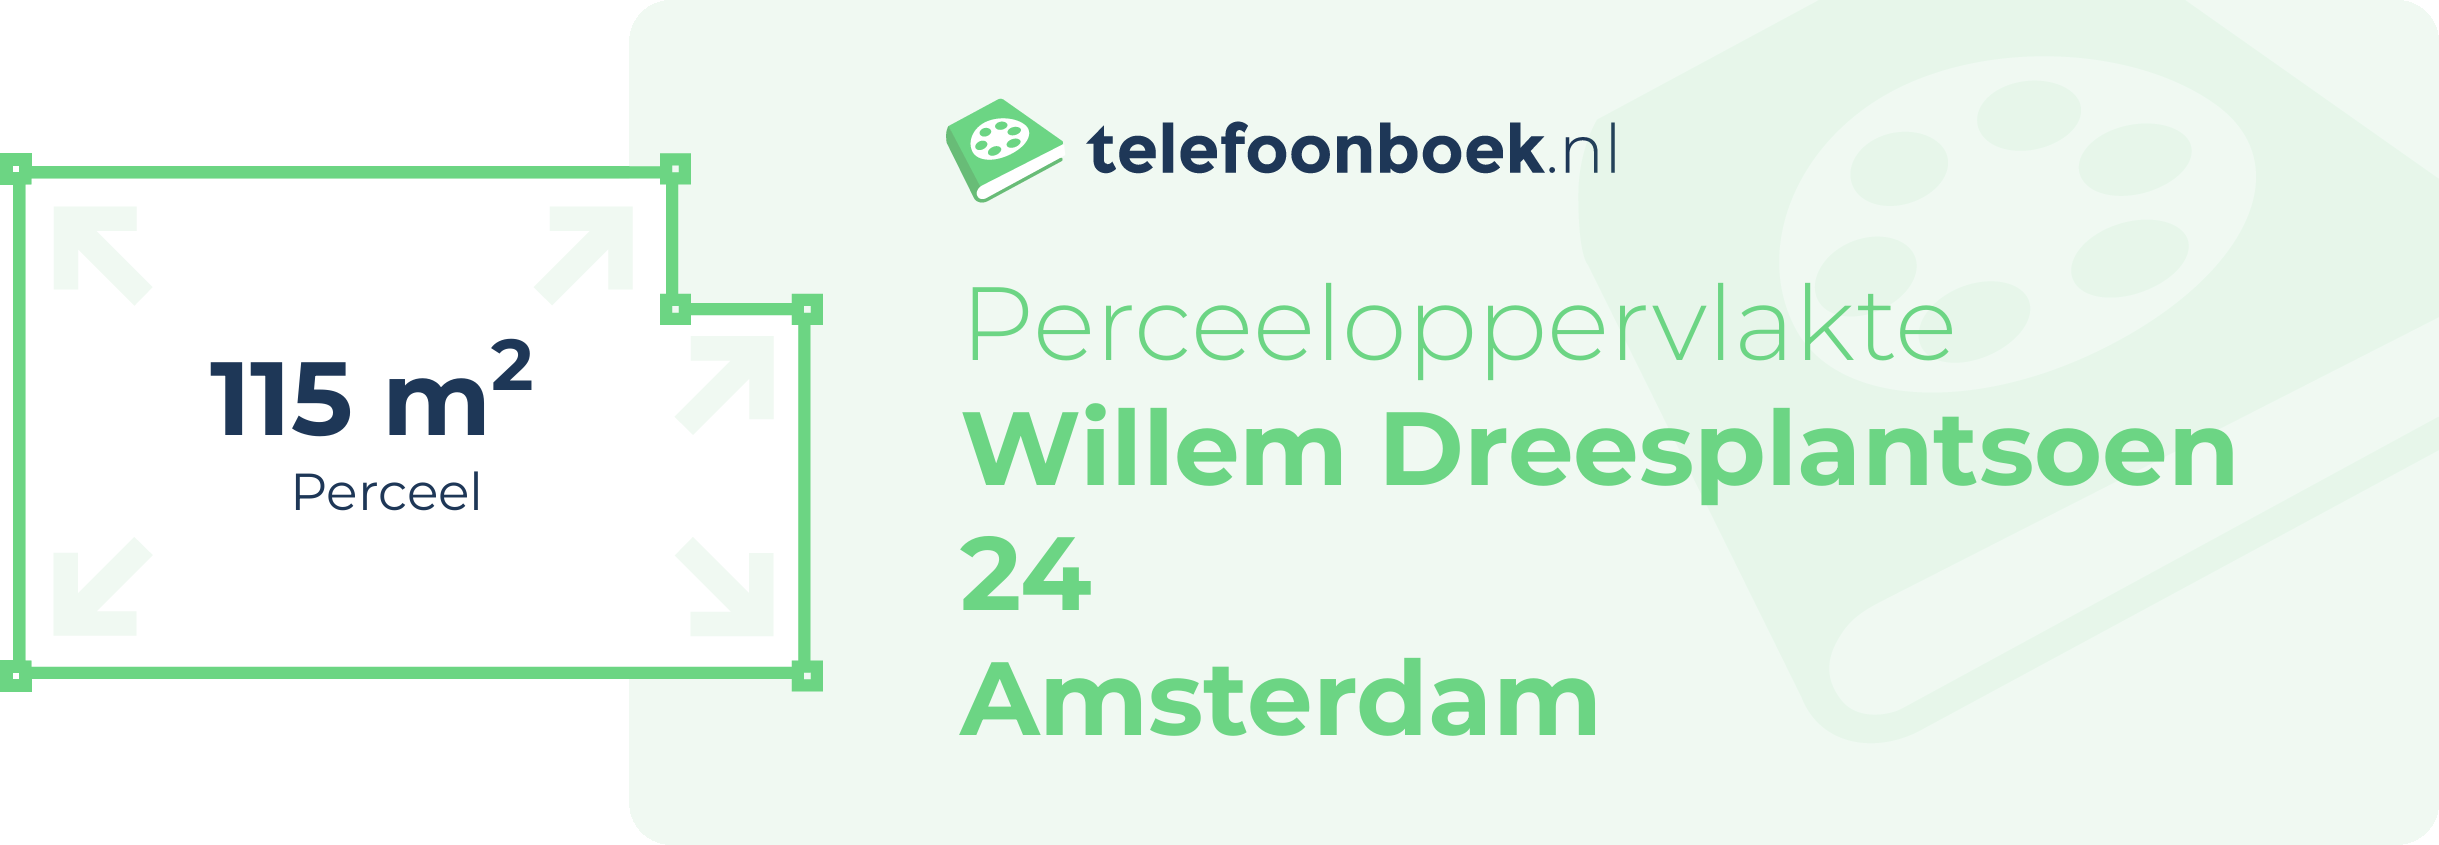 Perceeloppervlakte Willem Dreesplantsoen 24 Amsterdam